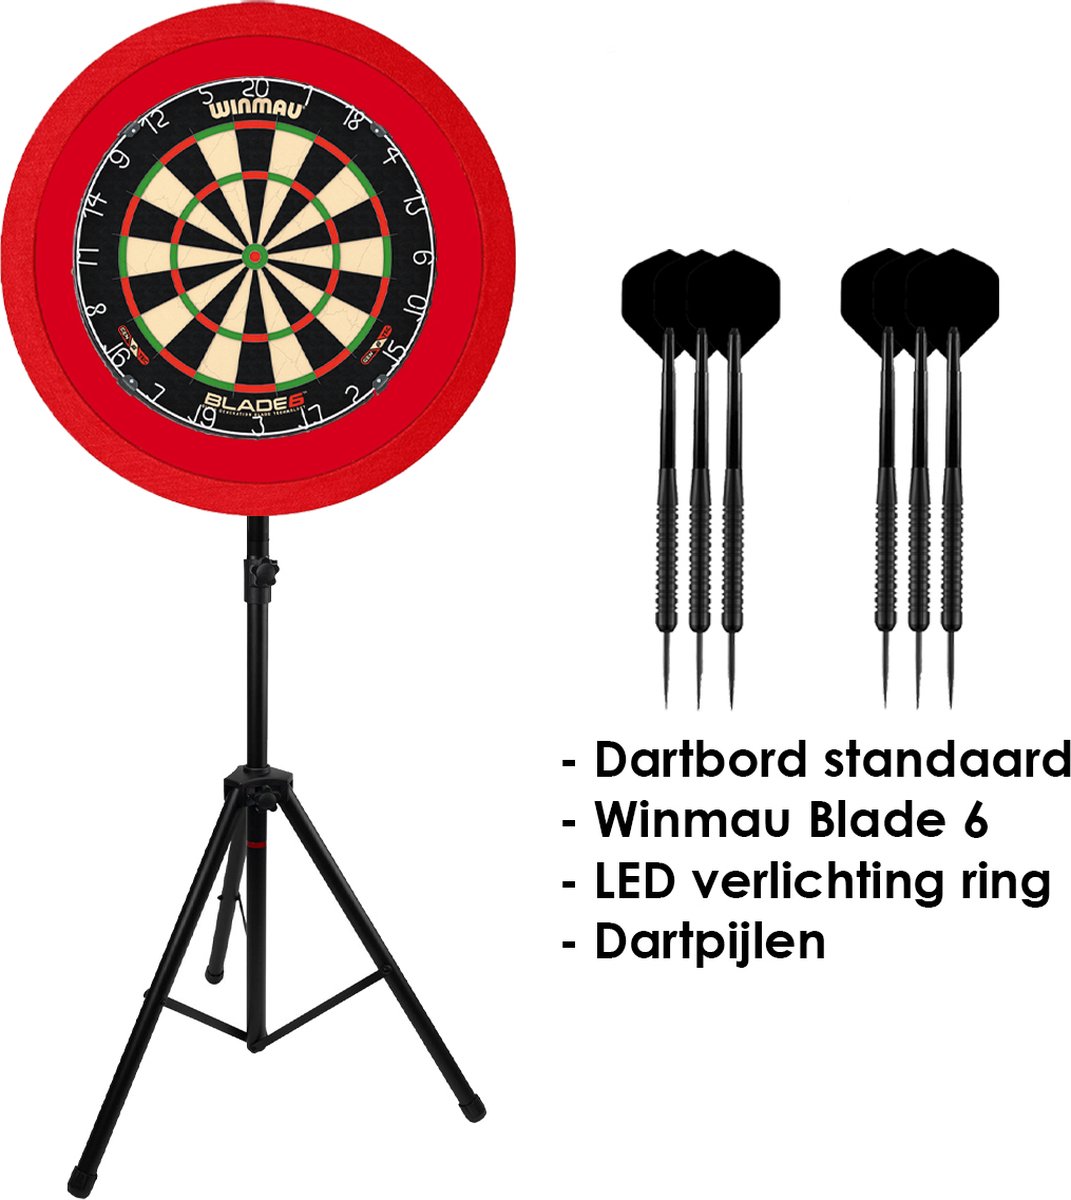 Dragon darts - Portable dartbord standaard LED pakket - inclusief Winmau Blade 6 - dartbord - en - LED surround ring - en - dartpijlen - rood